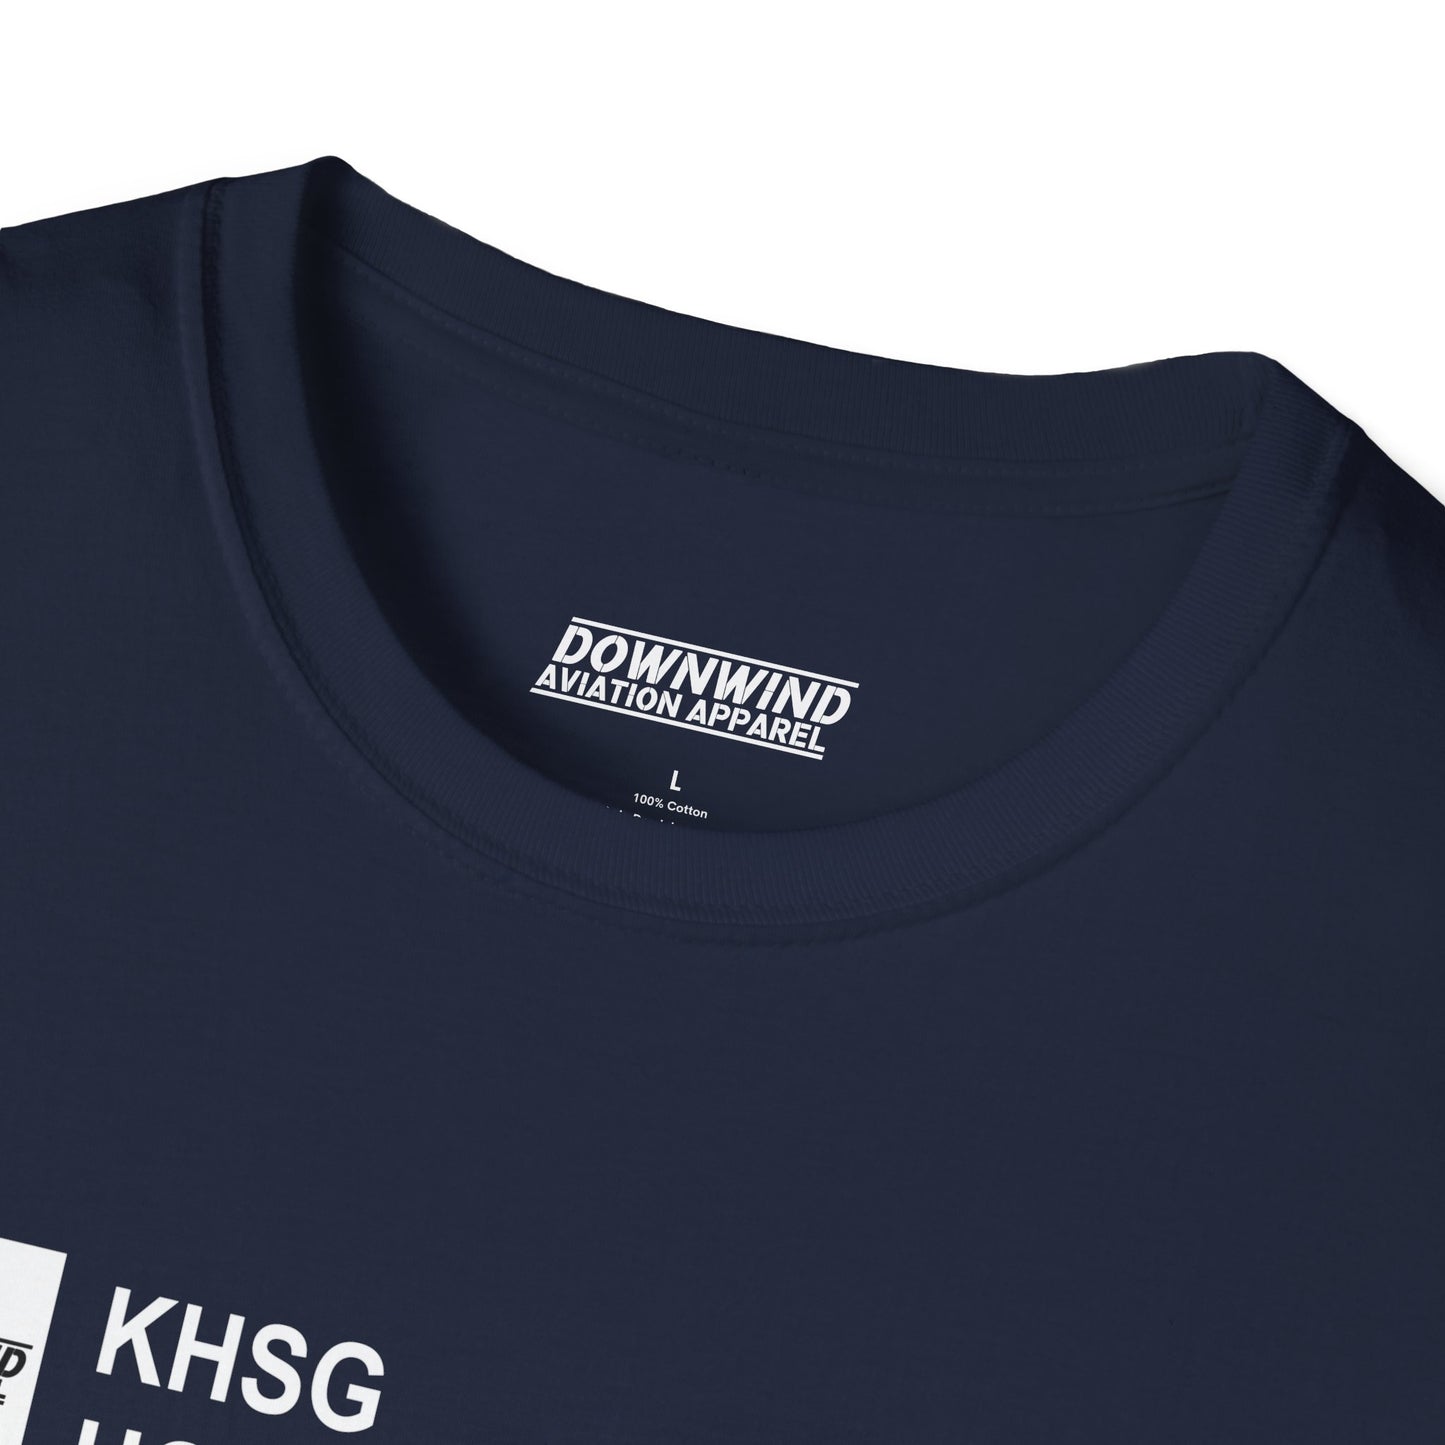 KHSG / Hot Springs County Shirt